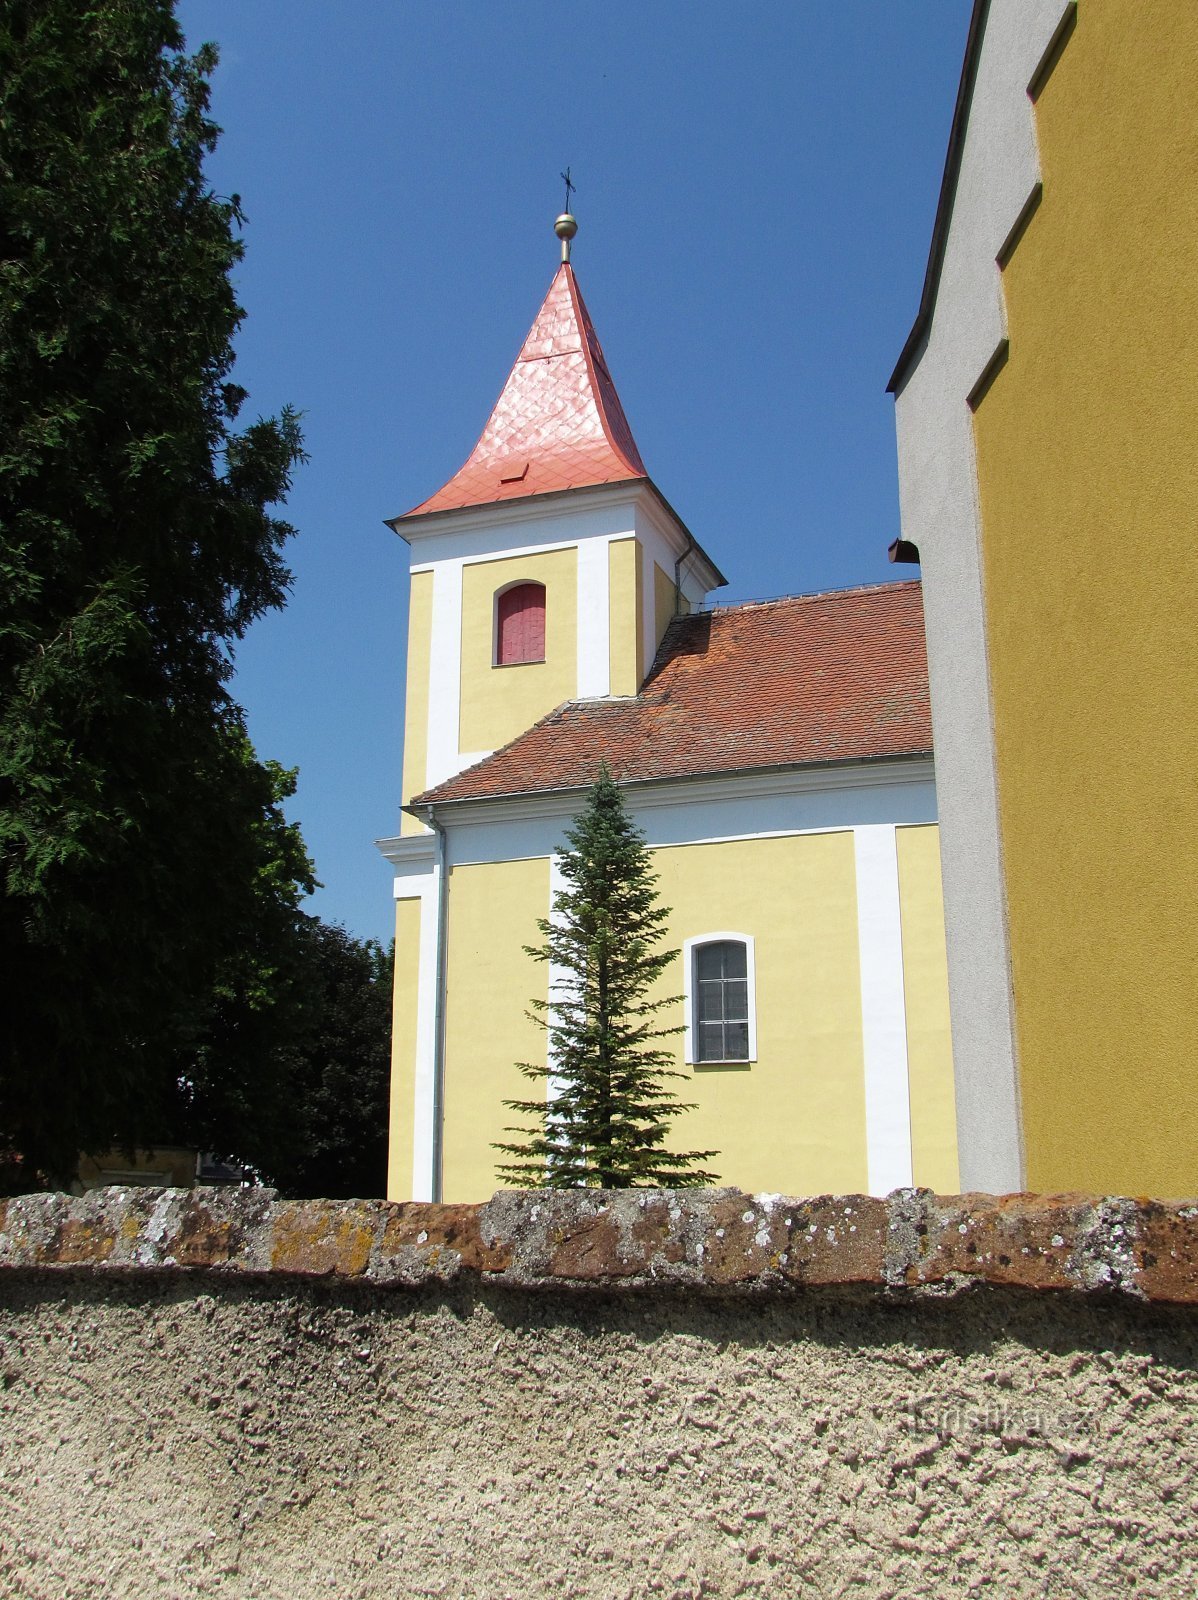 Tovačovský nhà thờ St. George